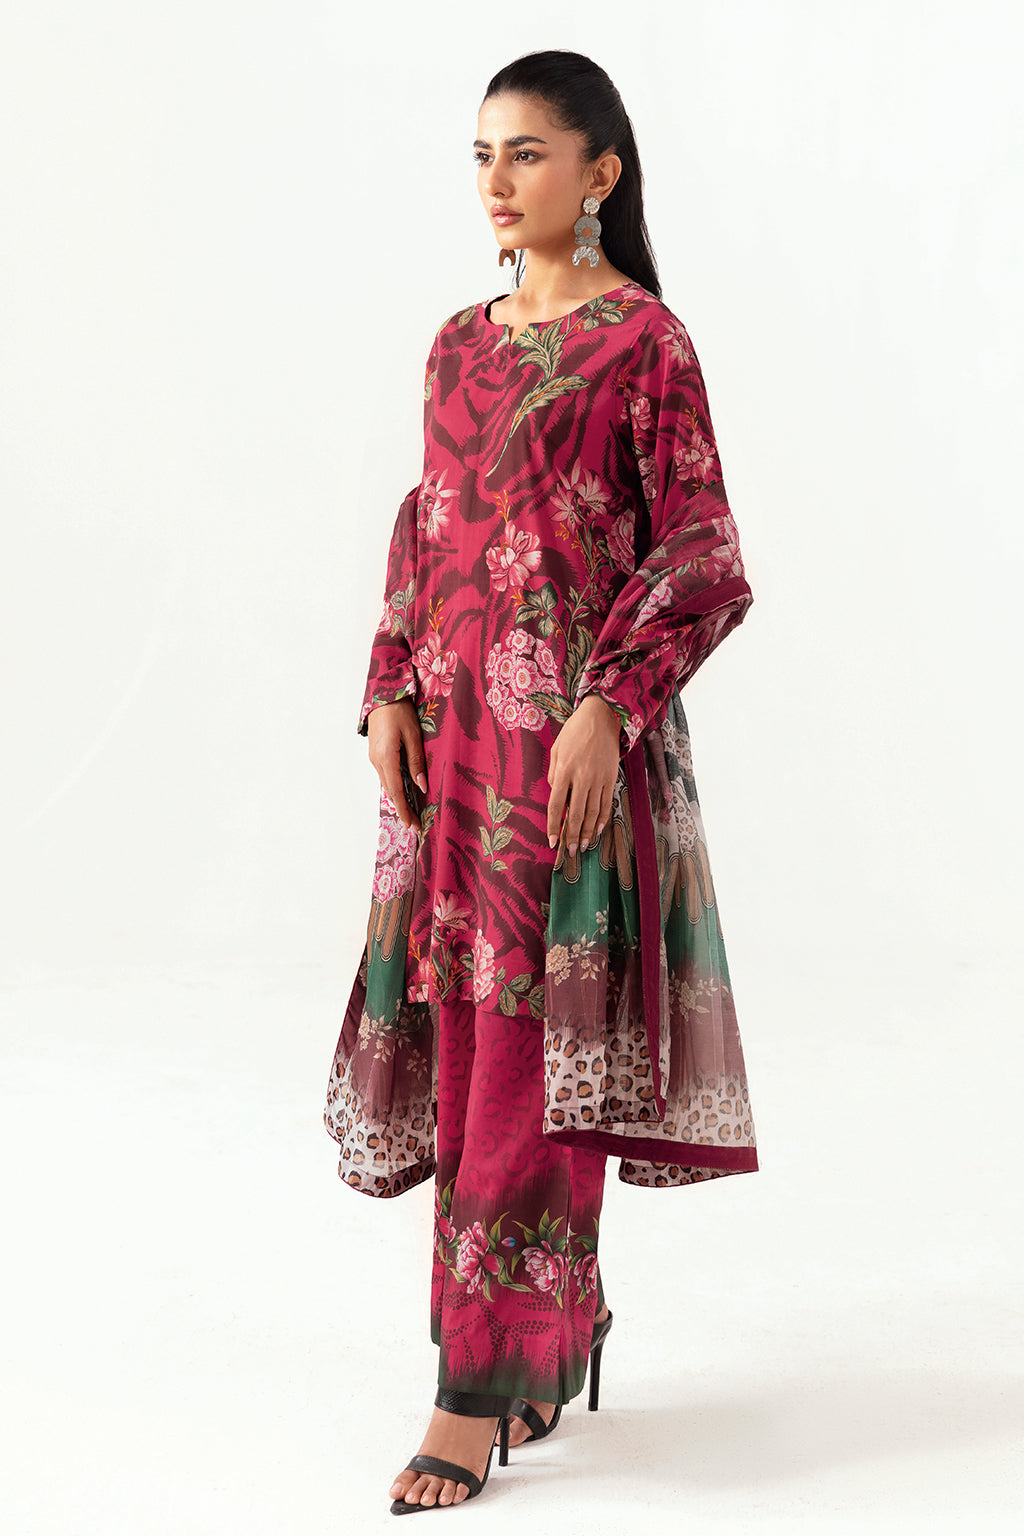 Ramsha | Pinted Lawn | RP-102 - Khanumjan  Pakistani Clothes and Designer Dresses in UK, USA 